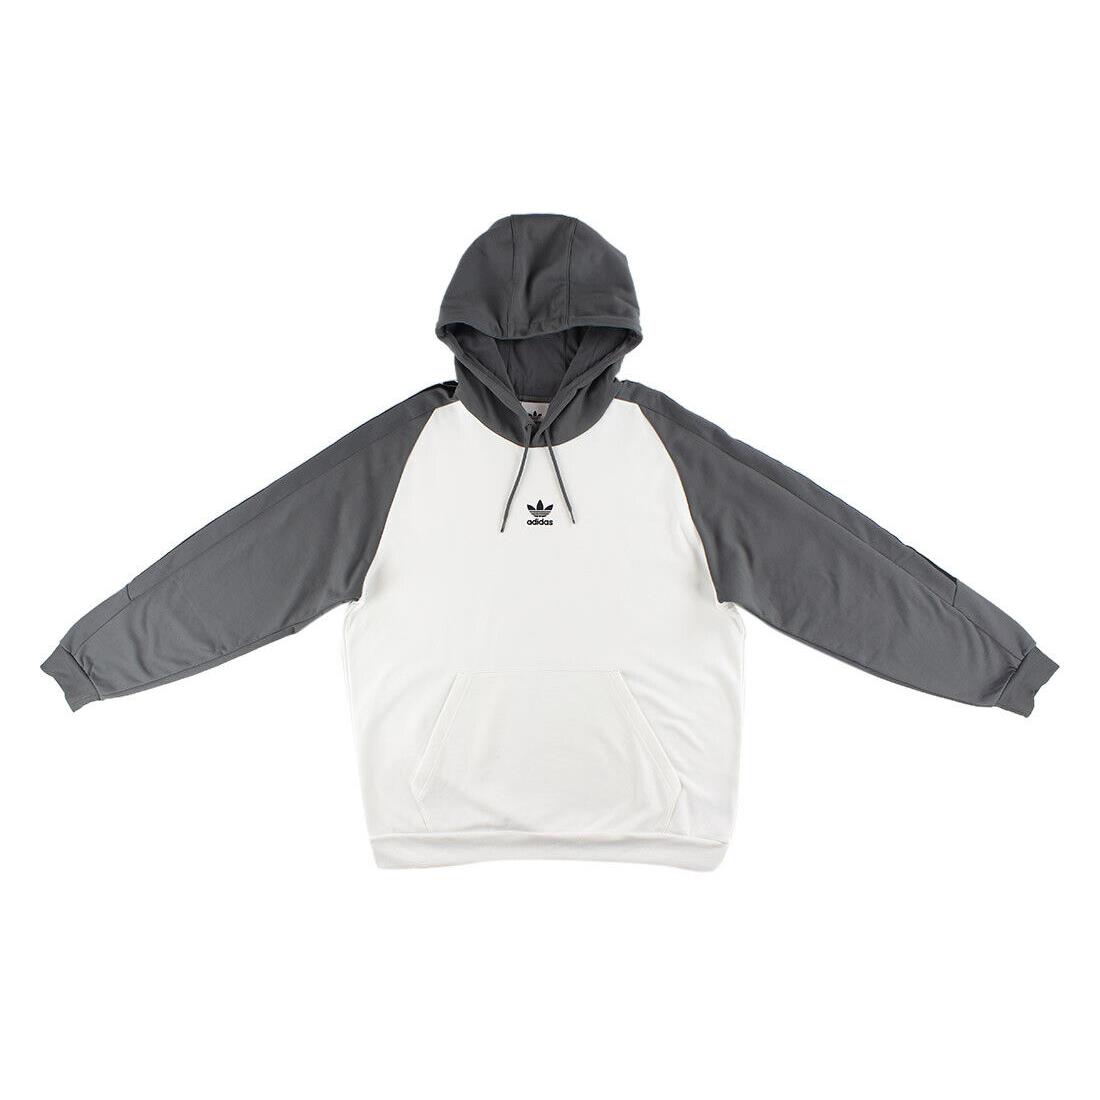 Adidas Originals On Edge Mens Active Hoodies Size XL Color: Grey/white